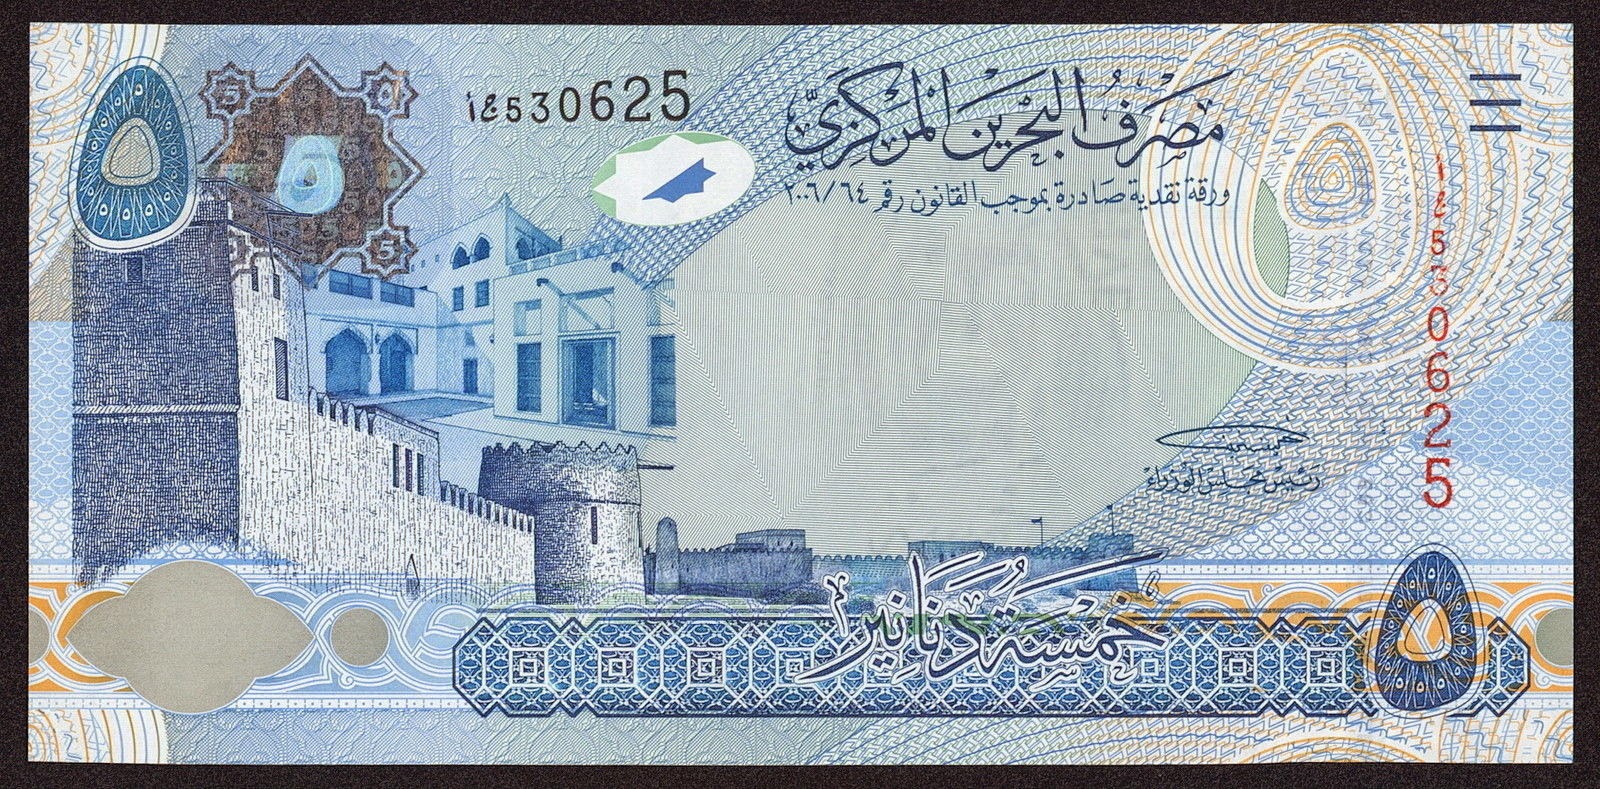 Bahrain Banknotes 5 Bahraini Dinars bank note 2008 Central Bank of Bahrain